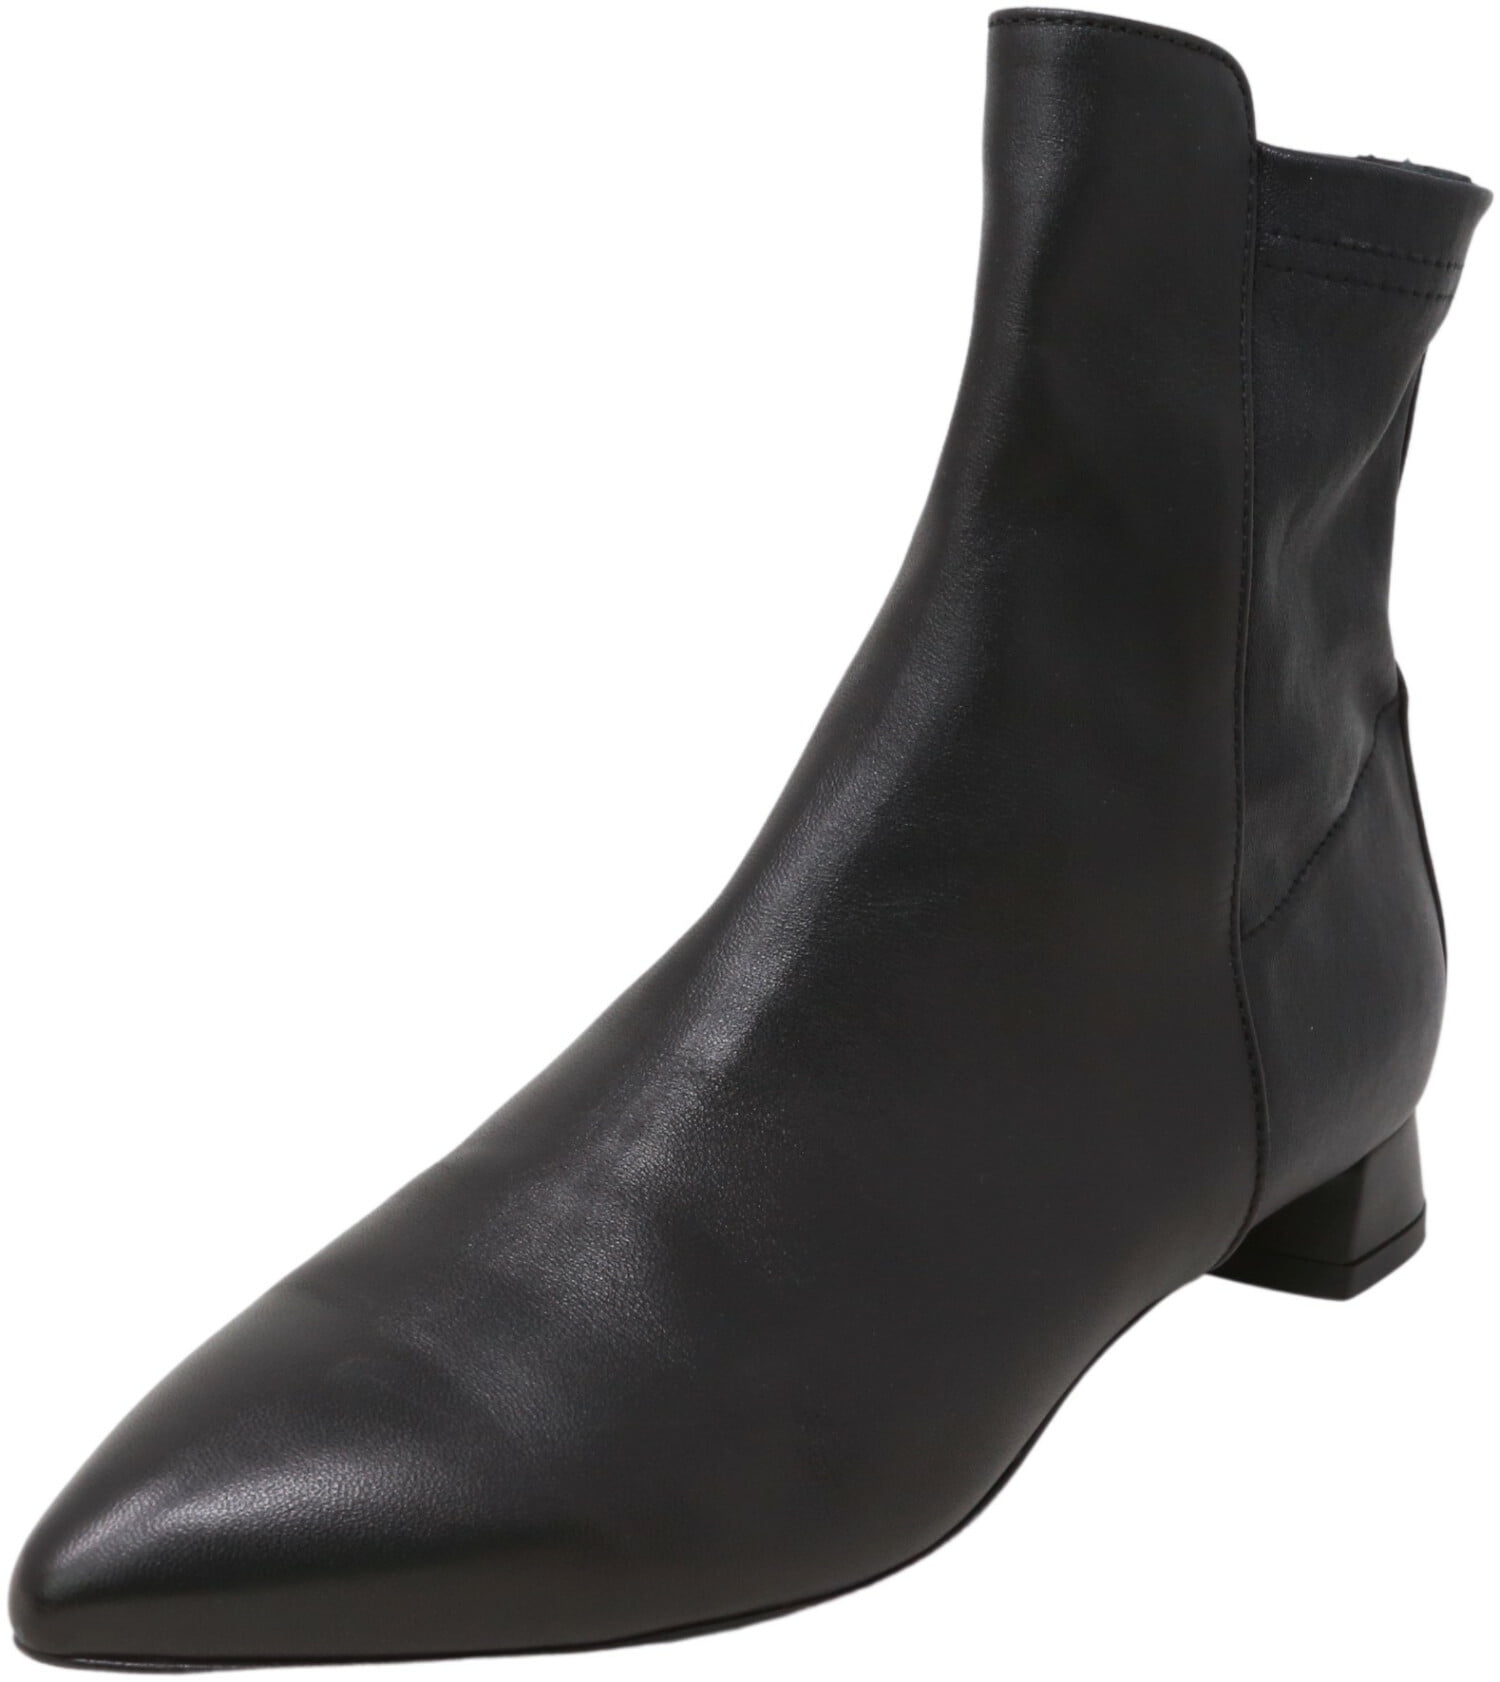 Agl Women's Pointed Toe Leather Boot Nero / Mid-Calf - 6M | Walmart Canada